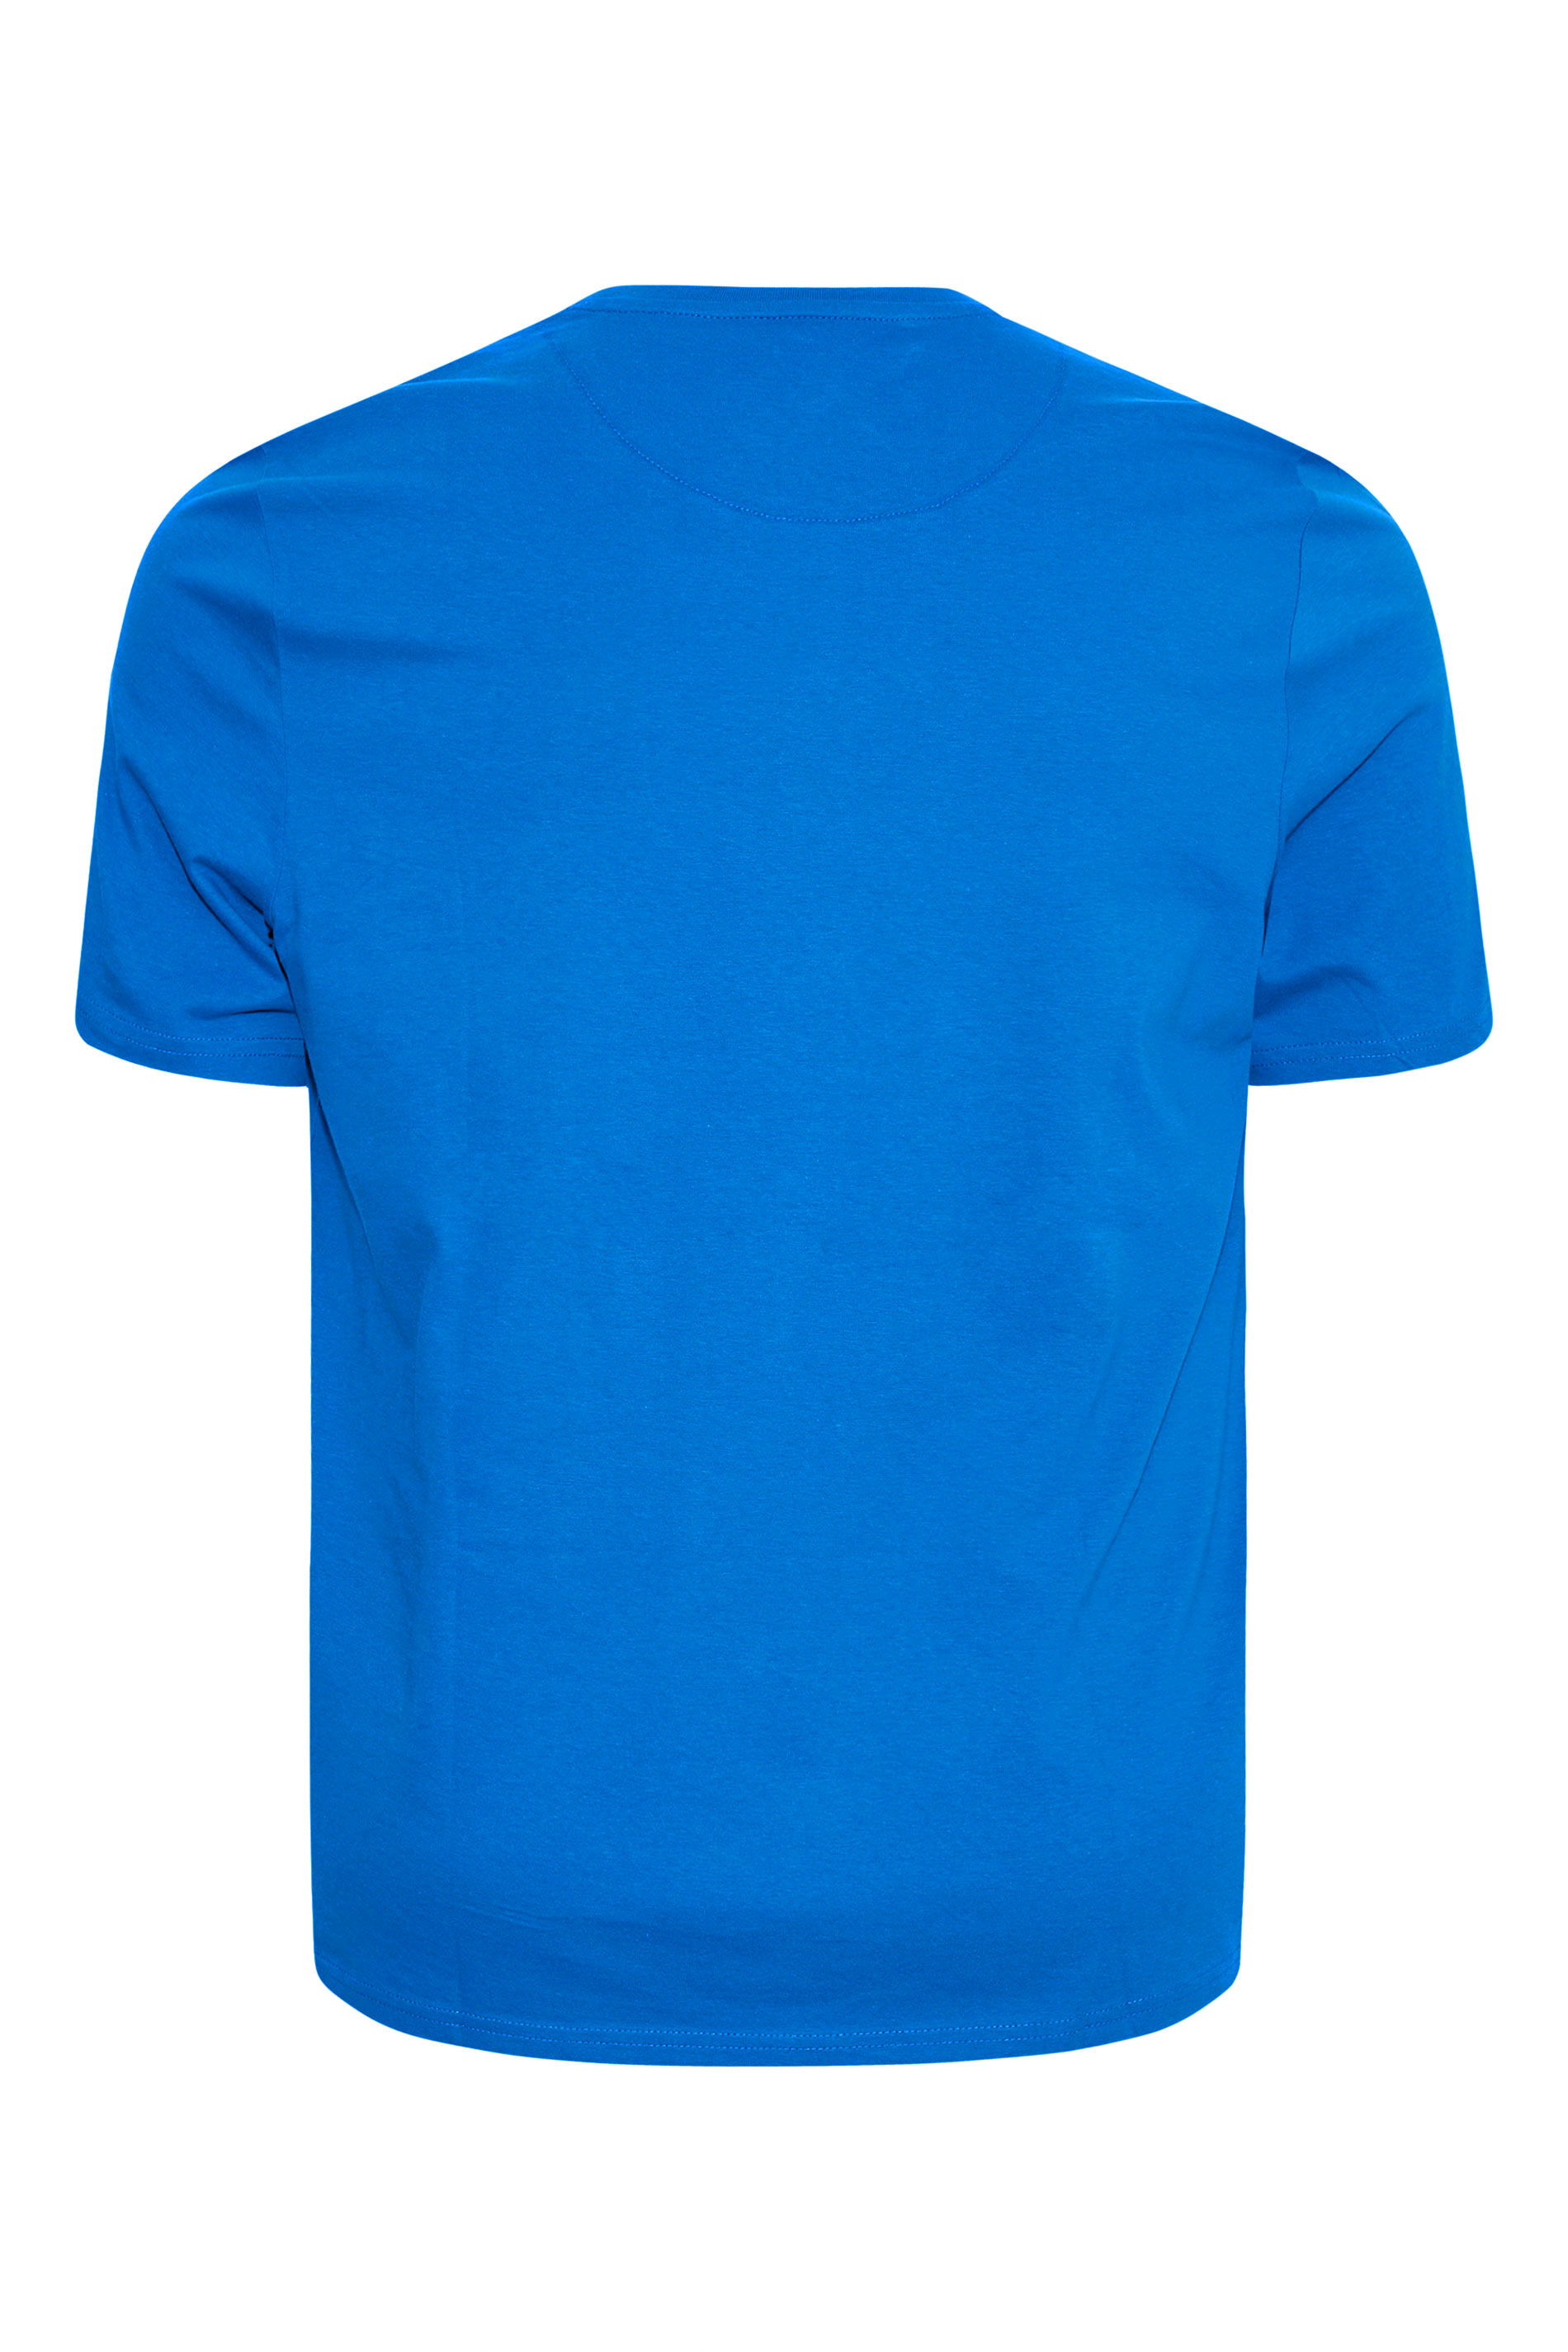 U.S. POLO ASSN. Blue USA Print T-Shirt | BadRhino 3